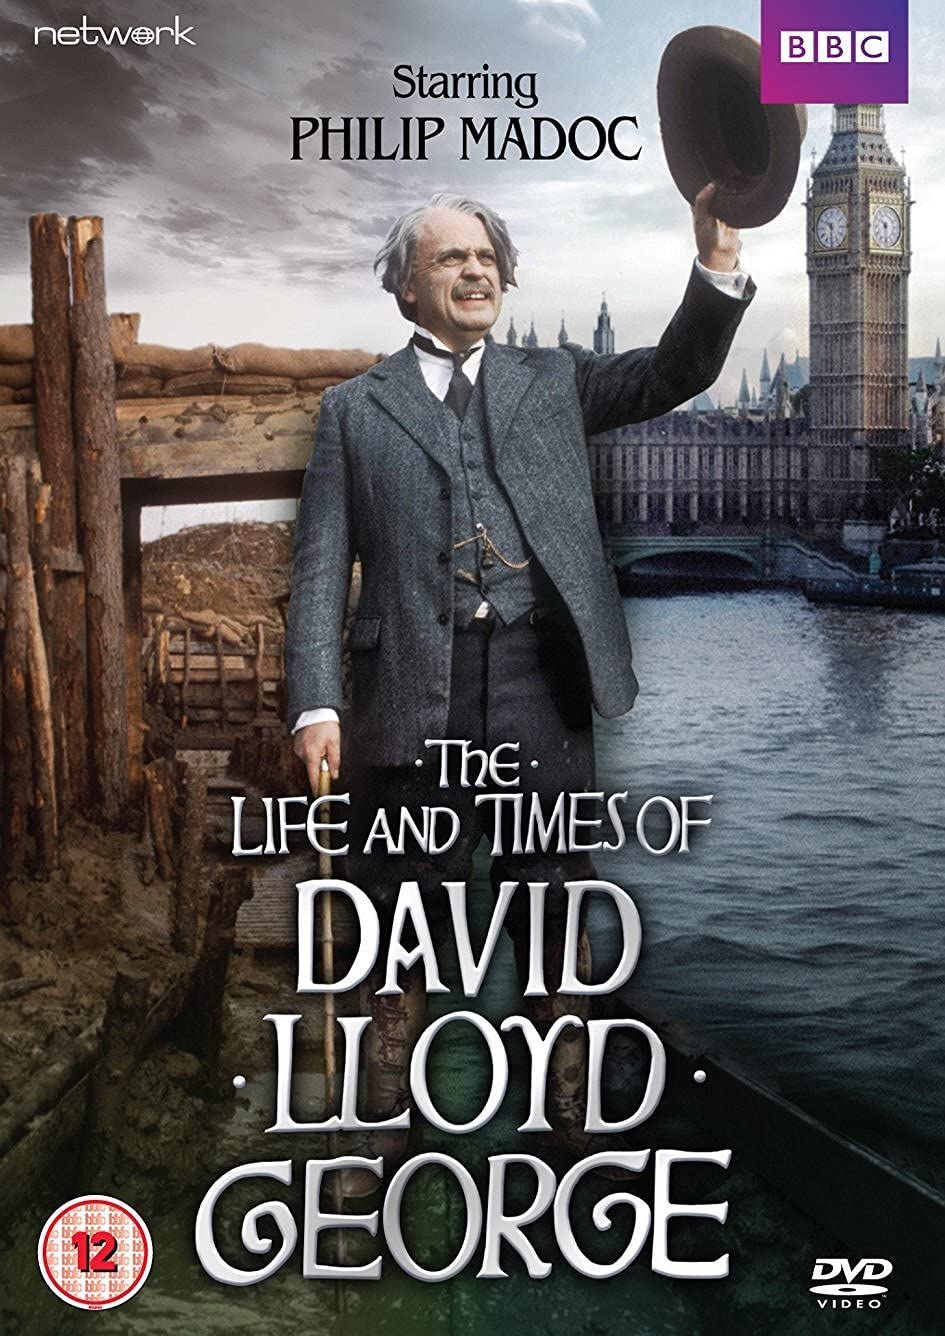 The Life and Times of David Lloyd George - Drama [DVD]